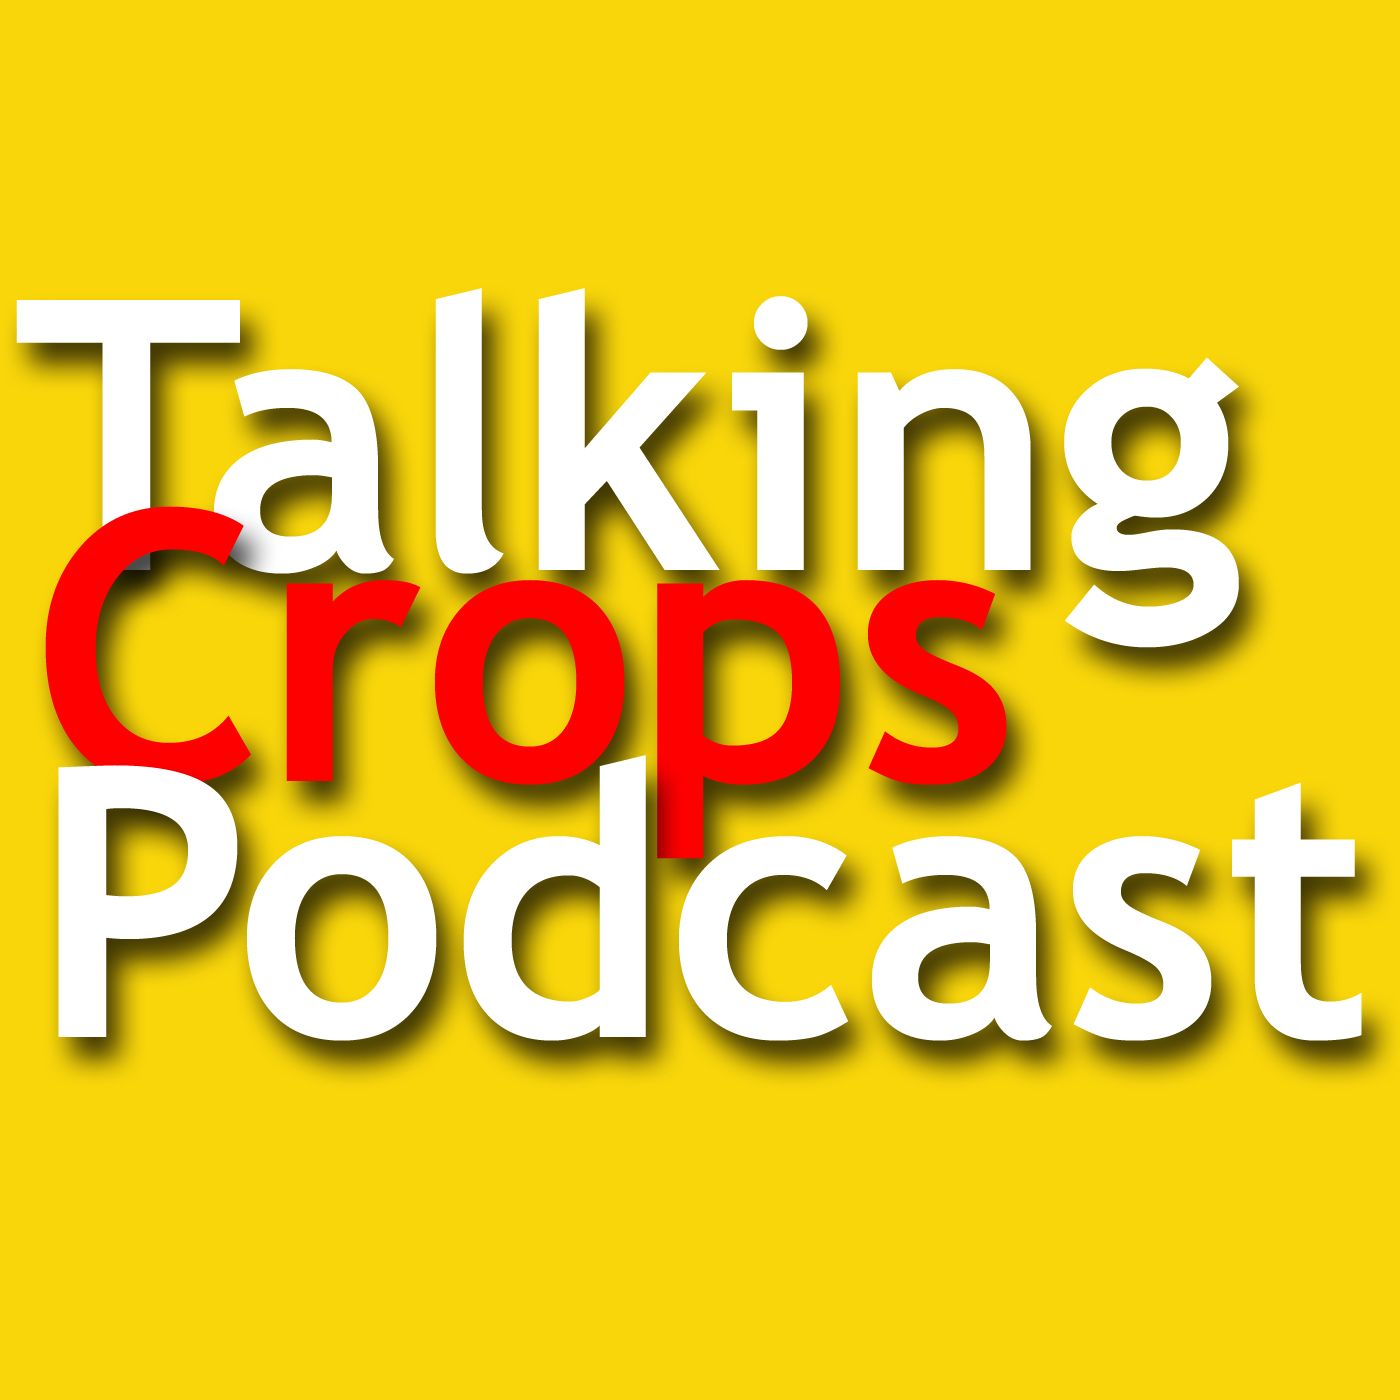 Talking Crops